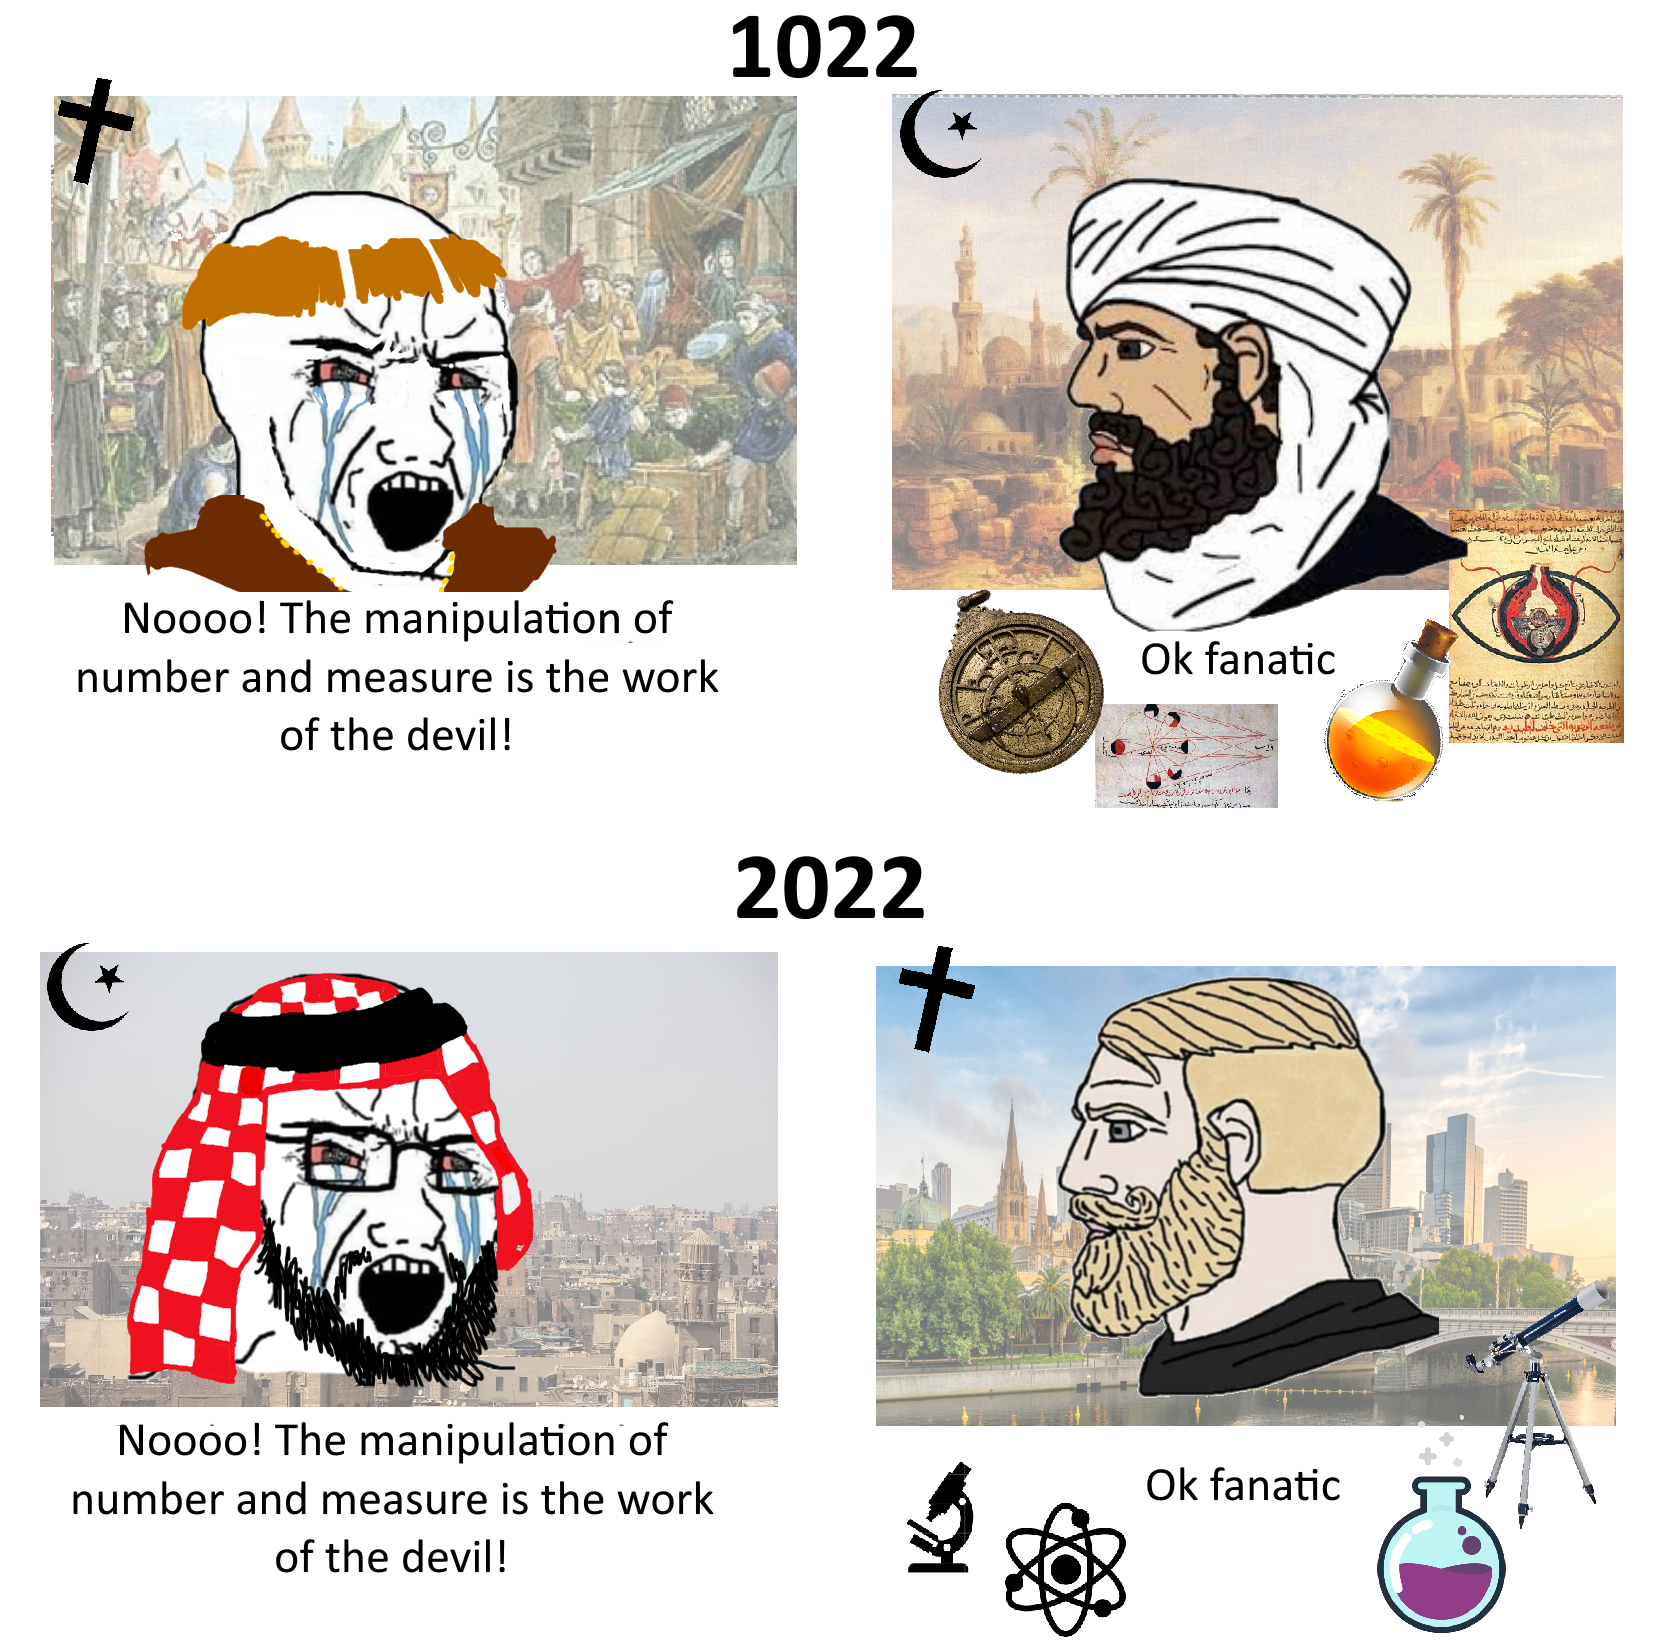 Islamic Golden age gone too soon